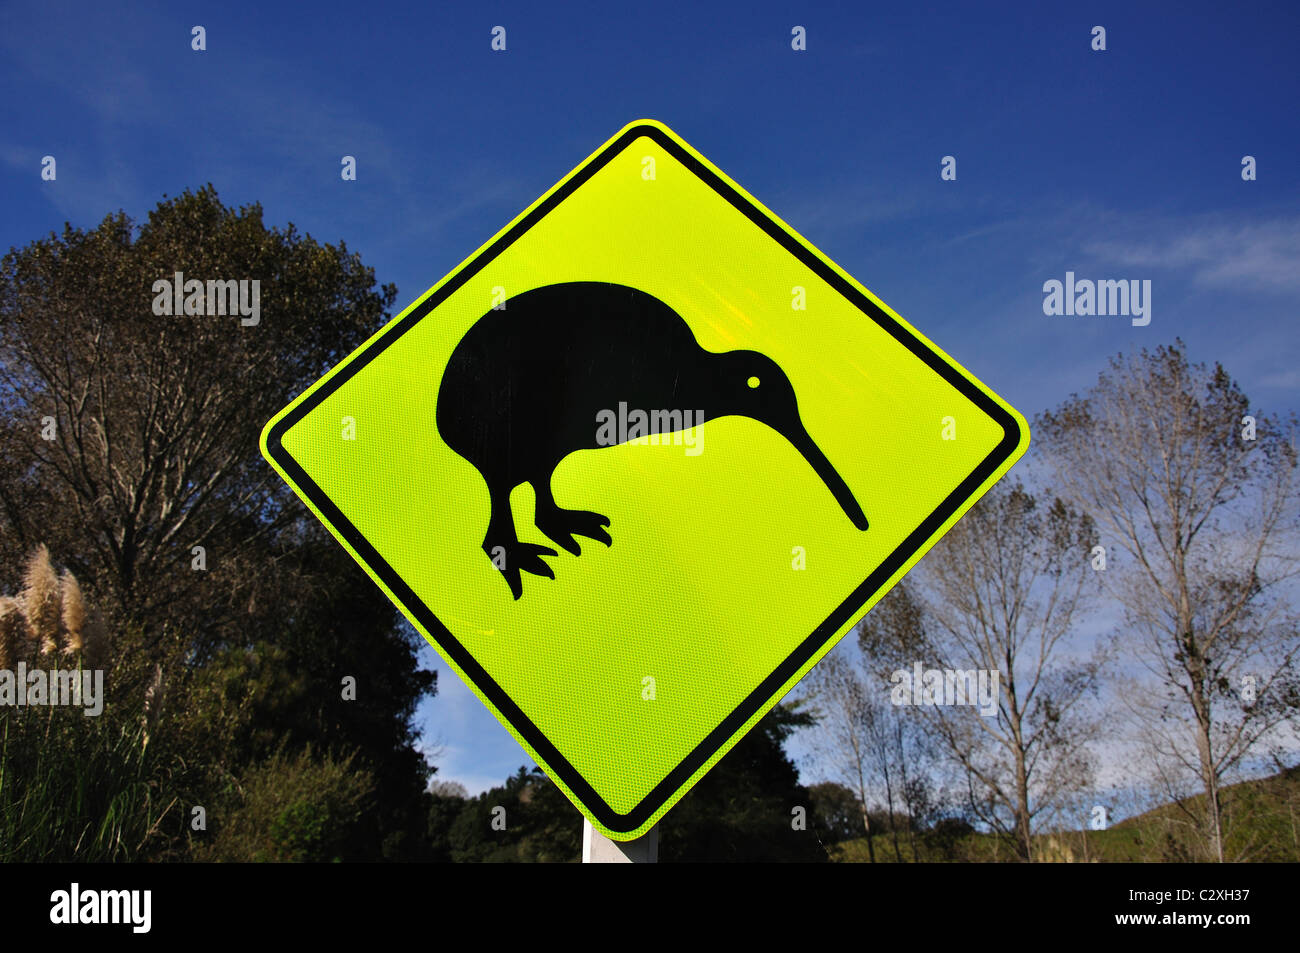 Kiwi road sign, Wharekura Réserver, Ohope, Bay of Plenty, North Island, New Zealand Banque D'Images